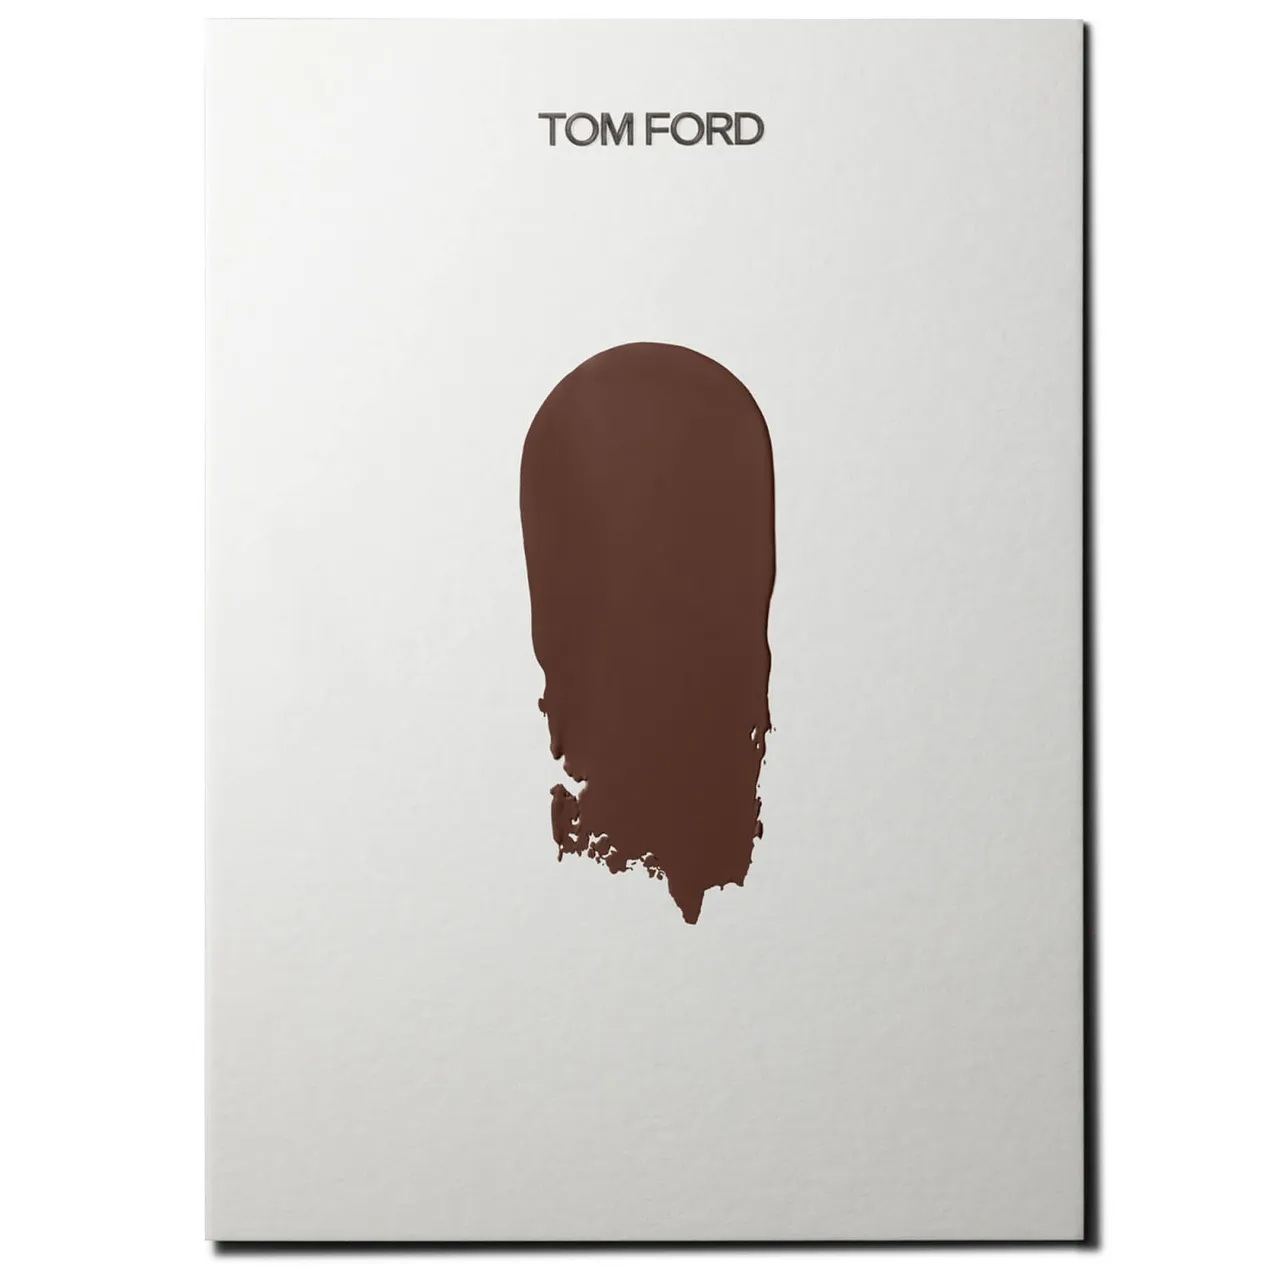 Tom Ford Traceless Foundation Stick 15g (Various Shades) - 11.5 Warm Nutmeg (5G)